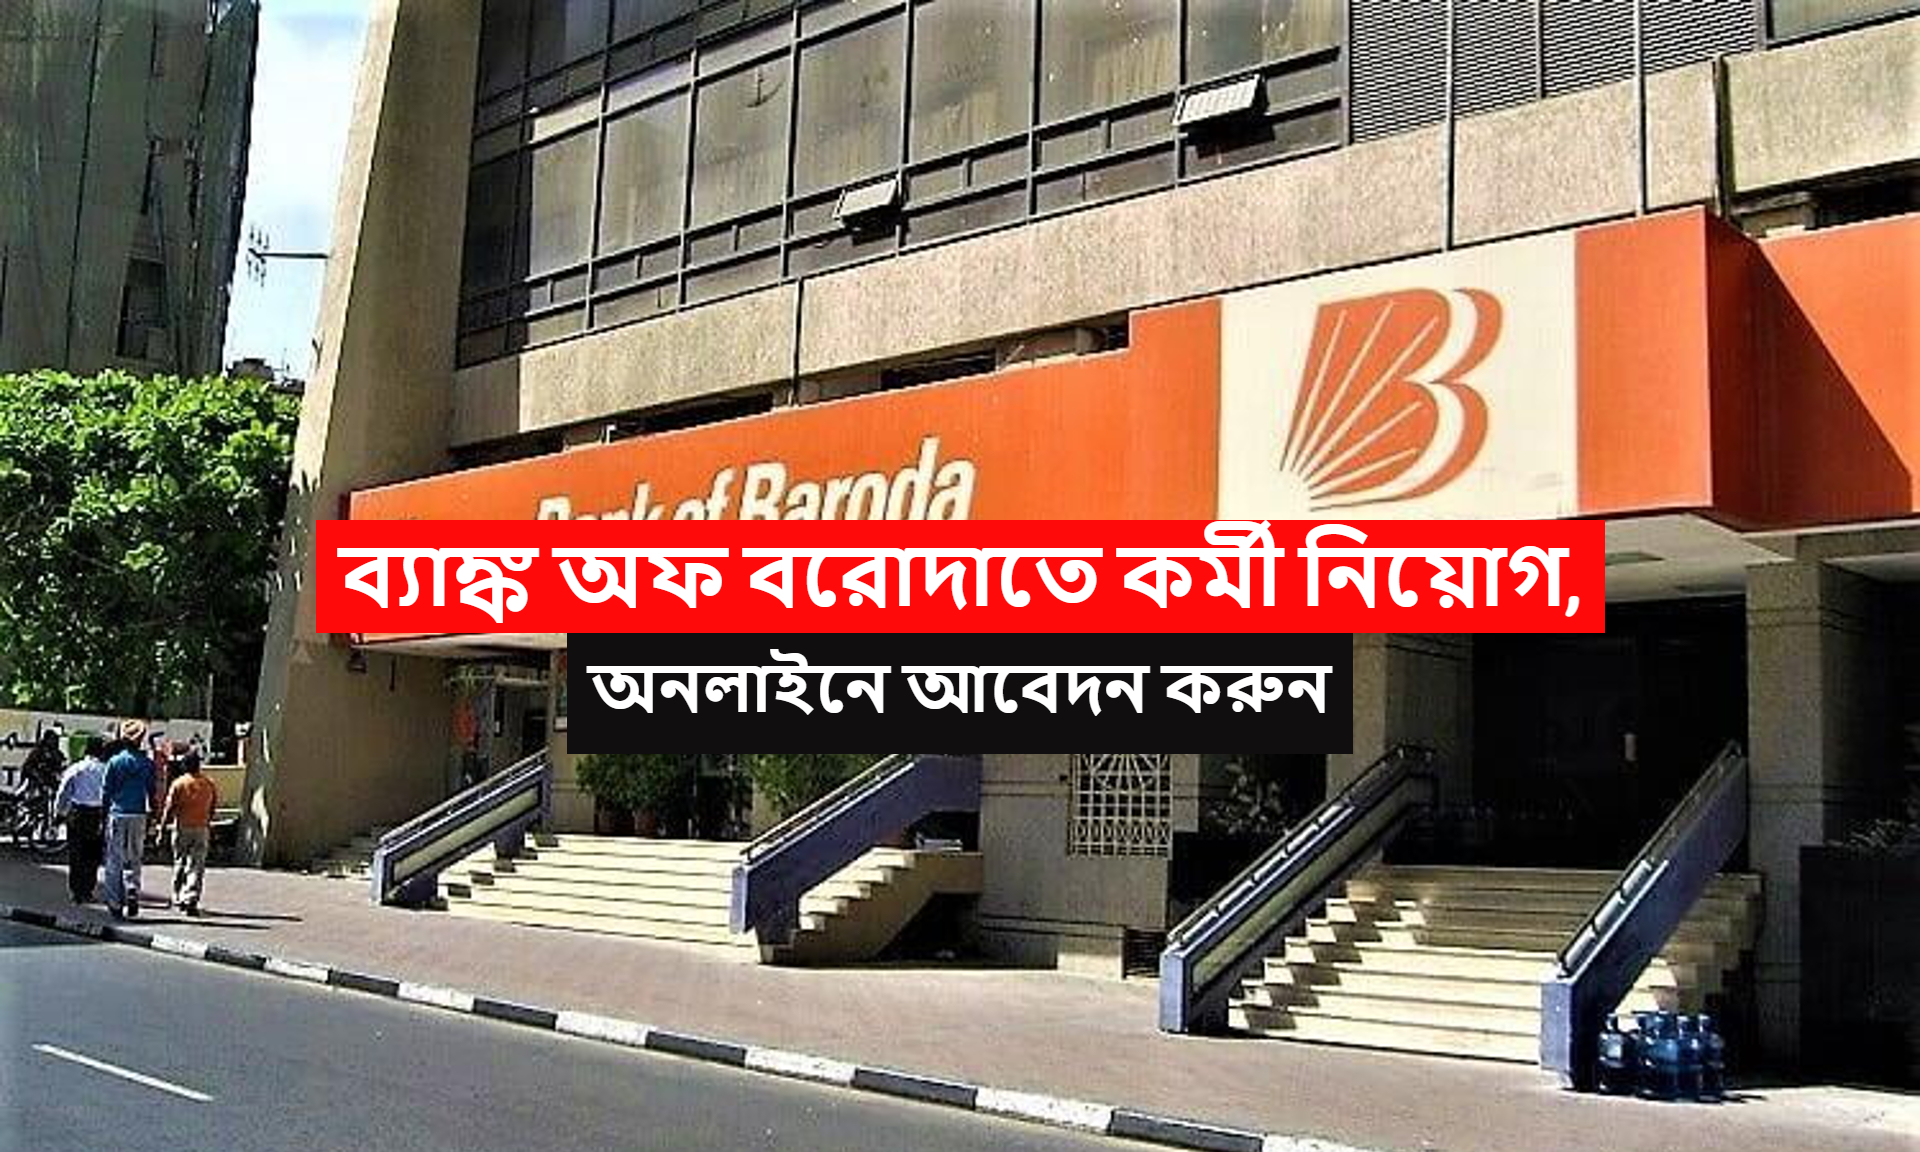 Bank Of Baroda Recruitment 2022